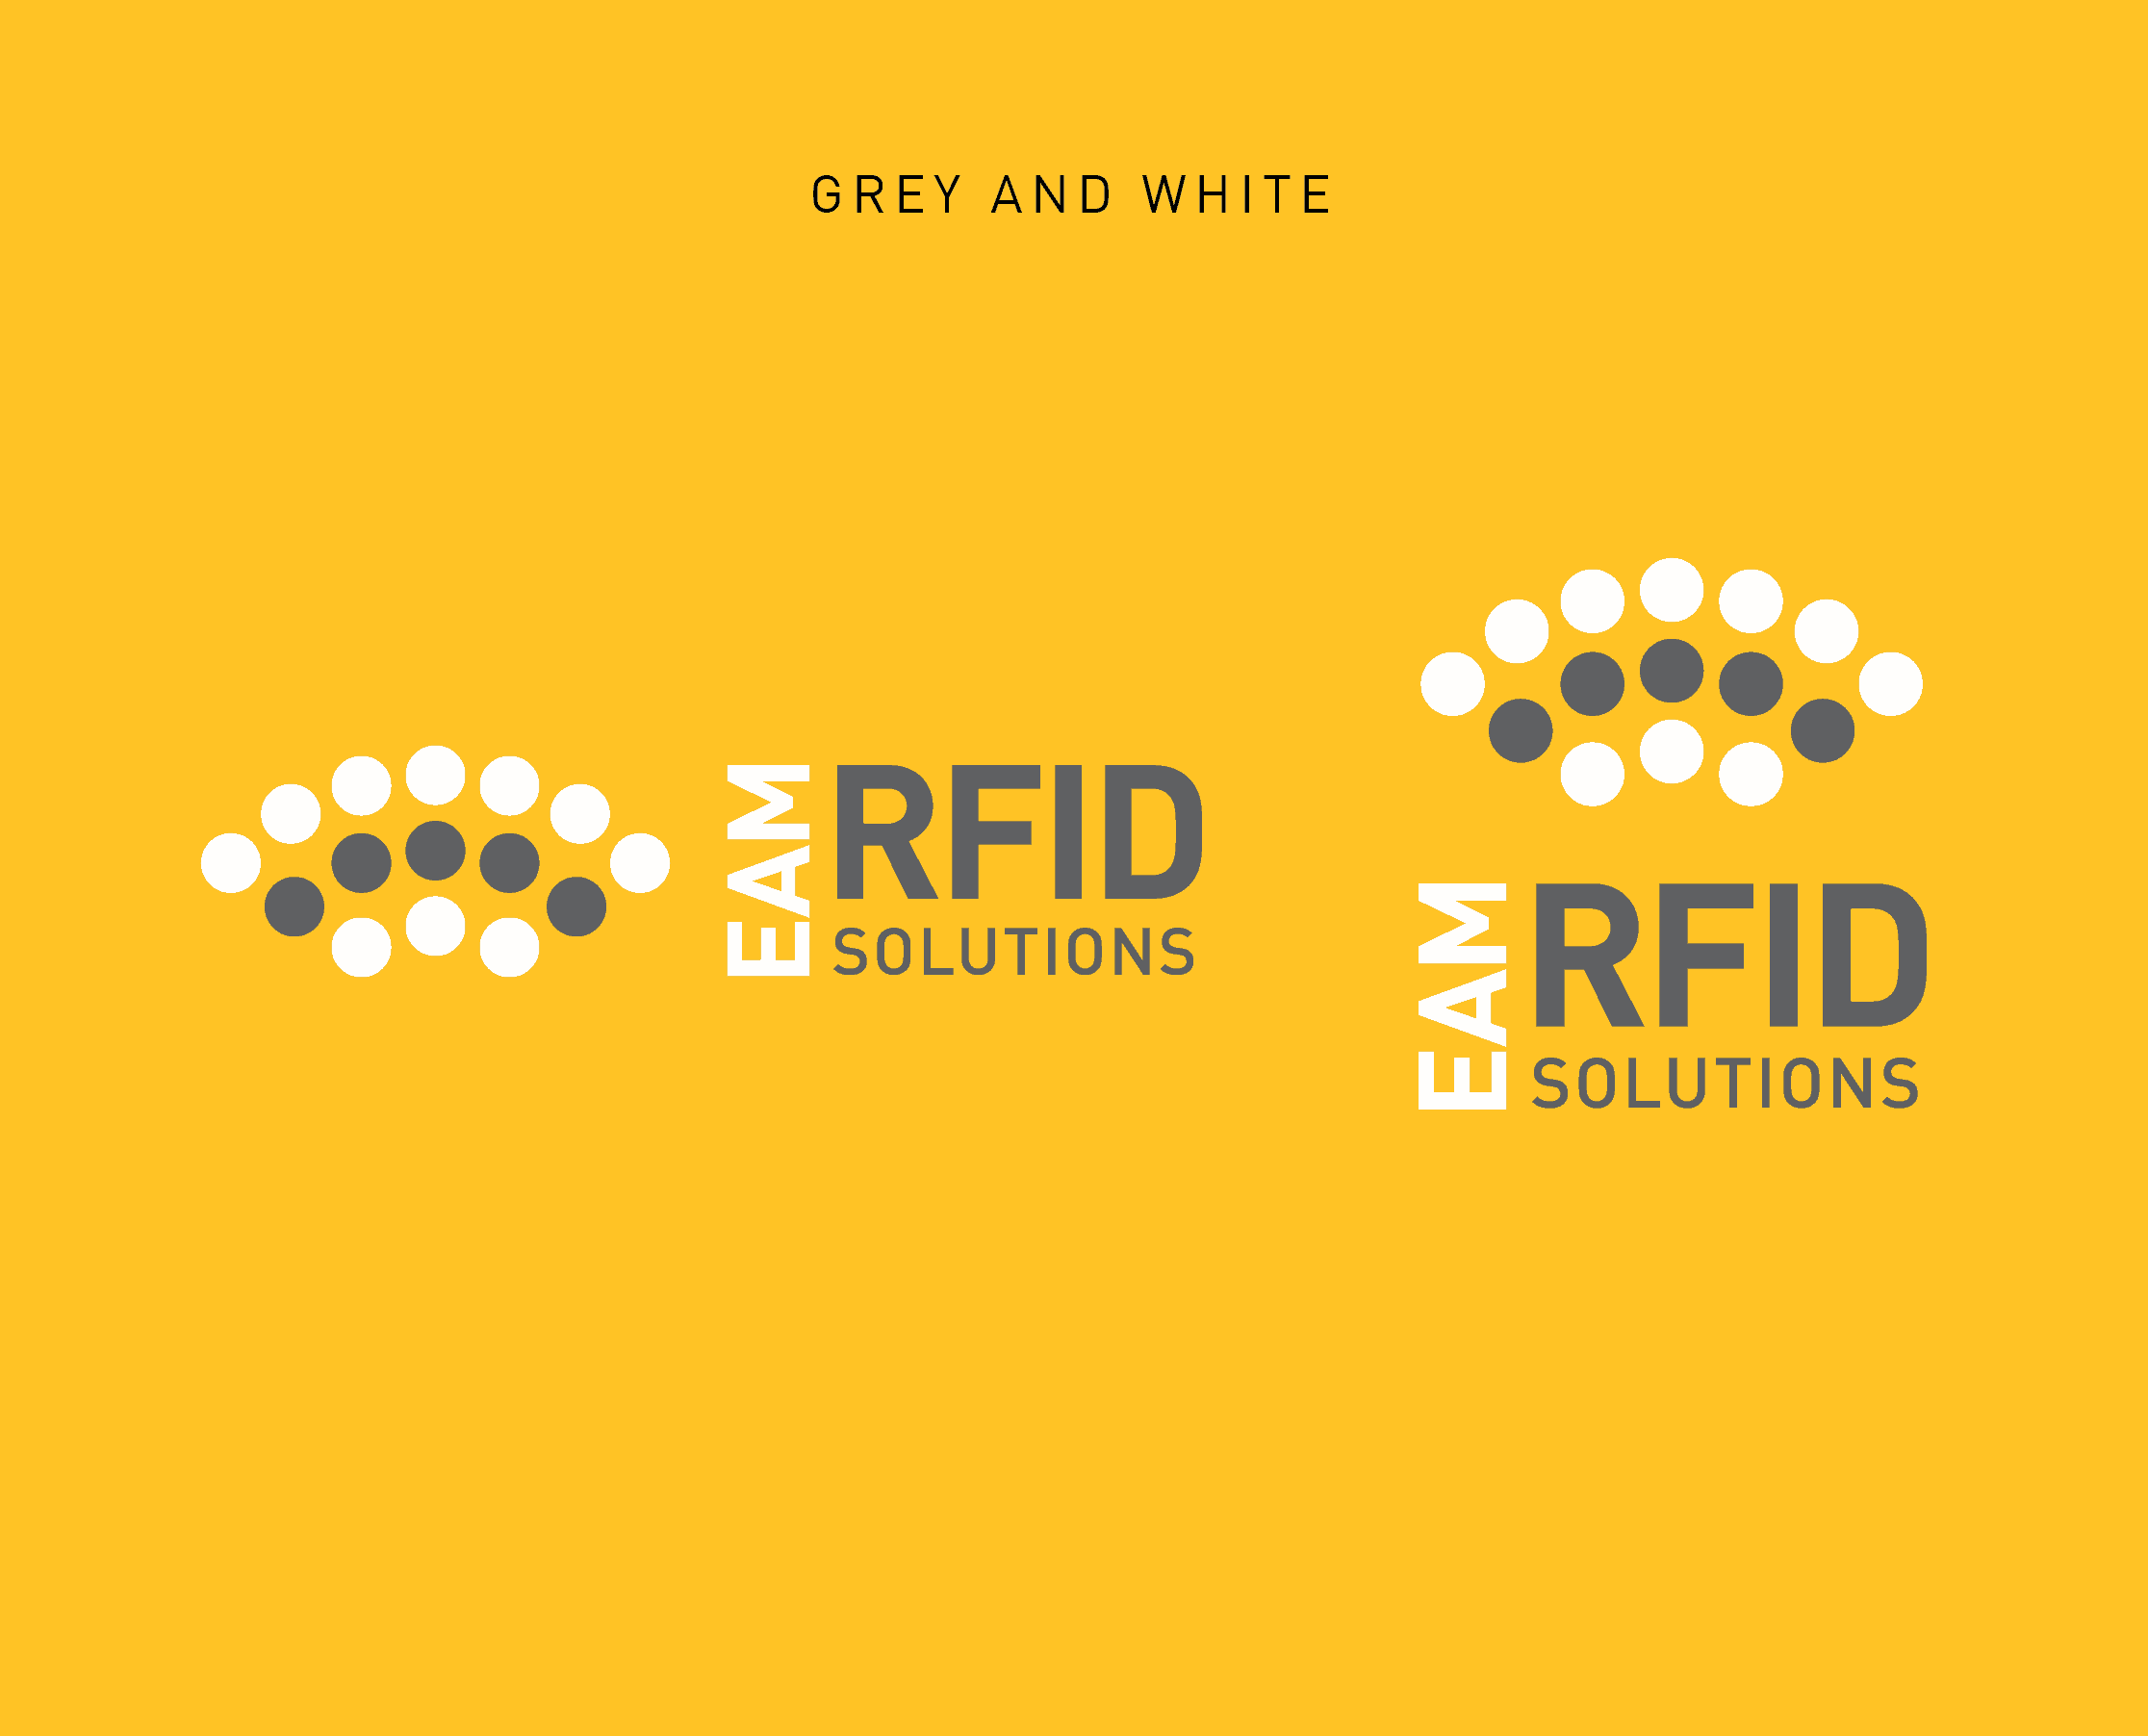 EAM RFID primary logo usage on yellow background